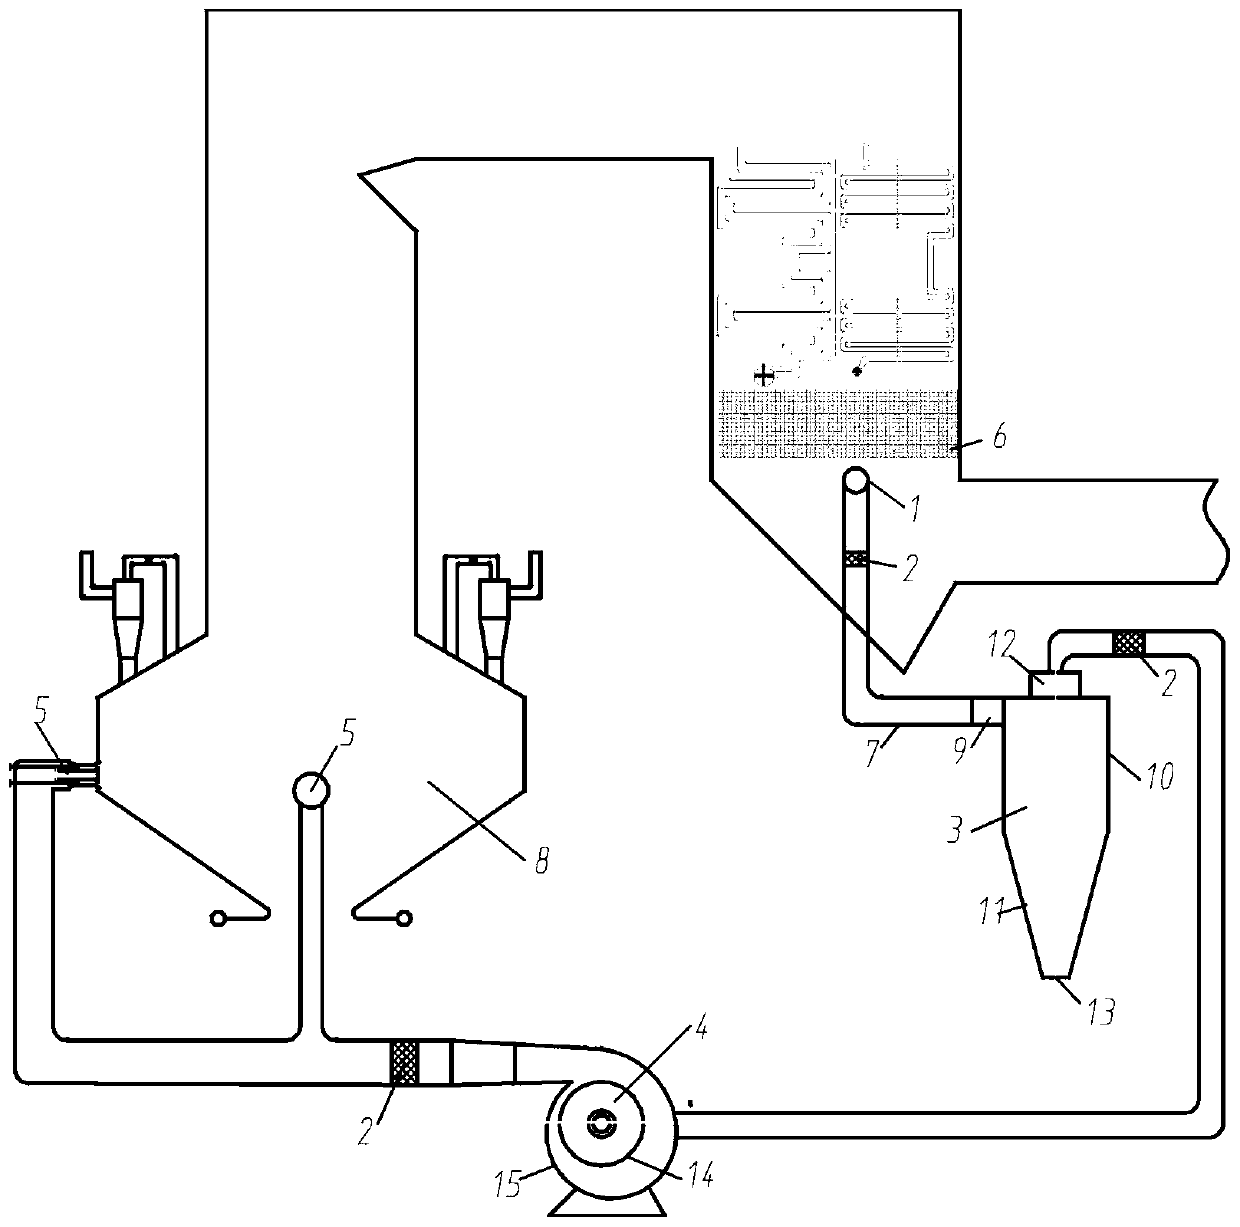 Flue gas recirculating system for low-nitrogen combustion and slag-bonding prevention of W-flame boiler